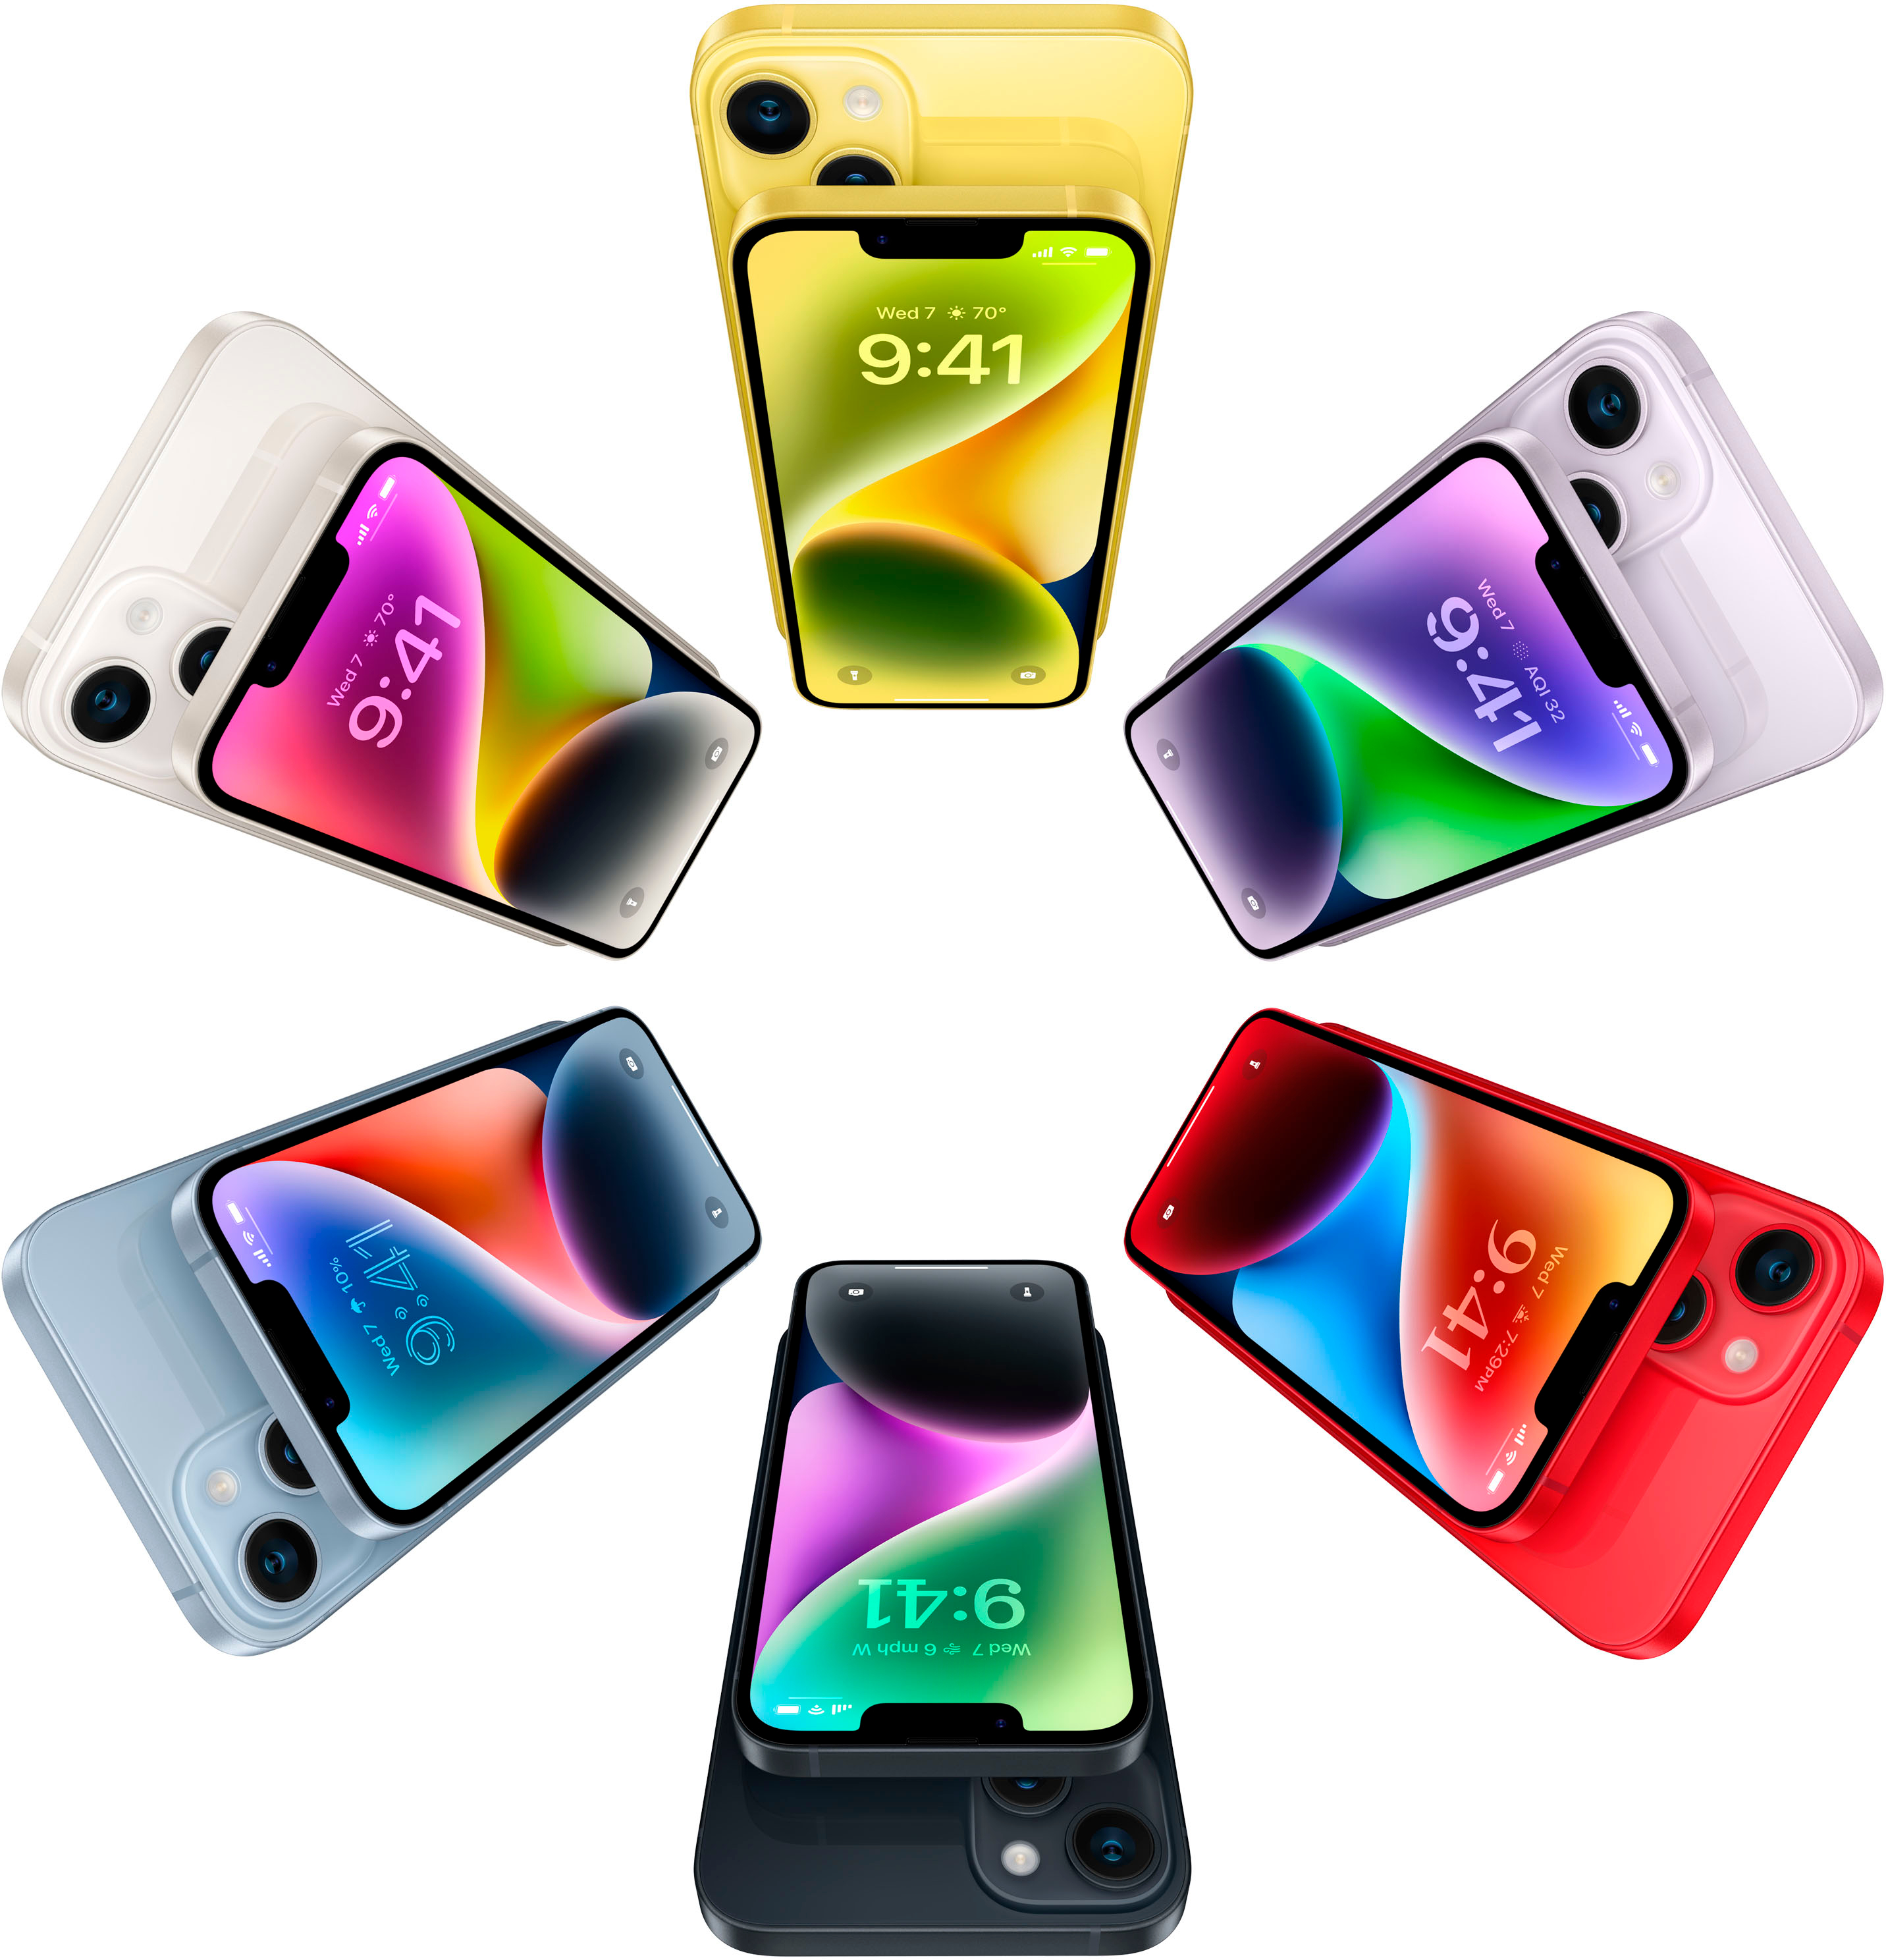 Apple iPhone 14 Plus 256GB Yellow (Verizon) MR5T3LL/A - Best Buy